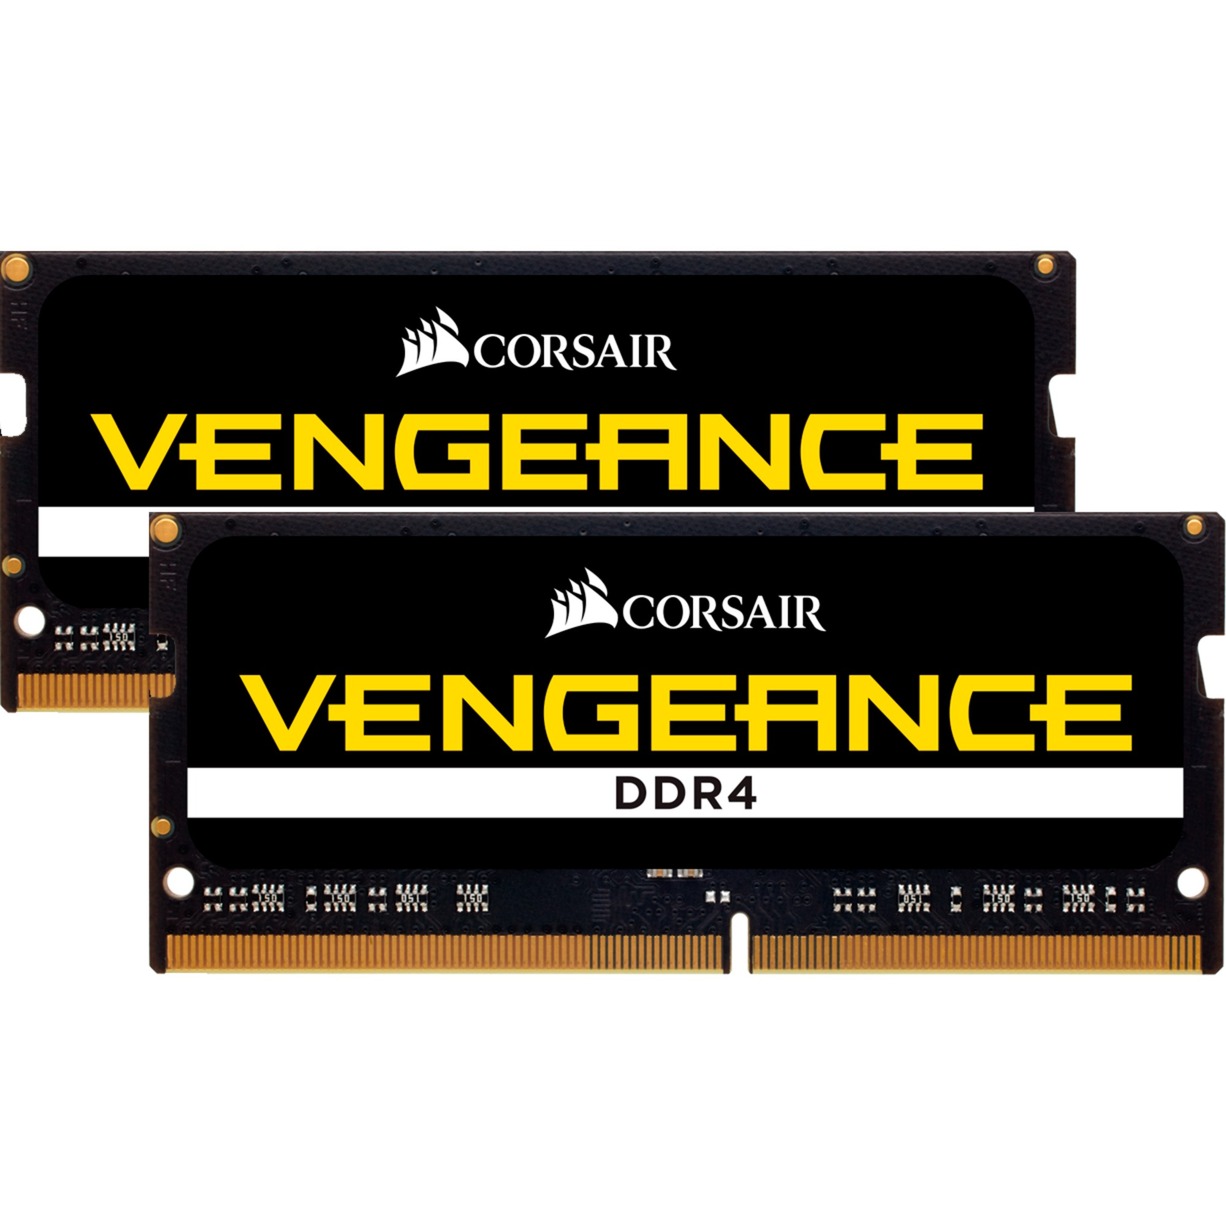 Corsair vengeance - ddr4 - 32 gb: 2 x 16 gb